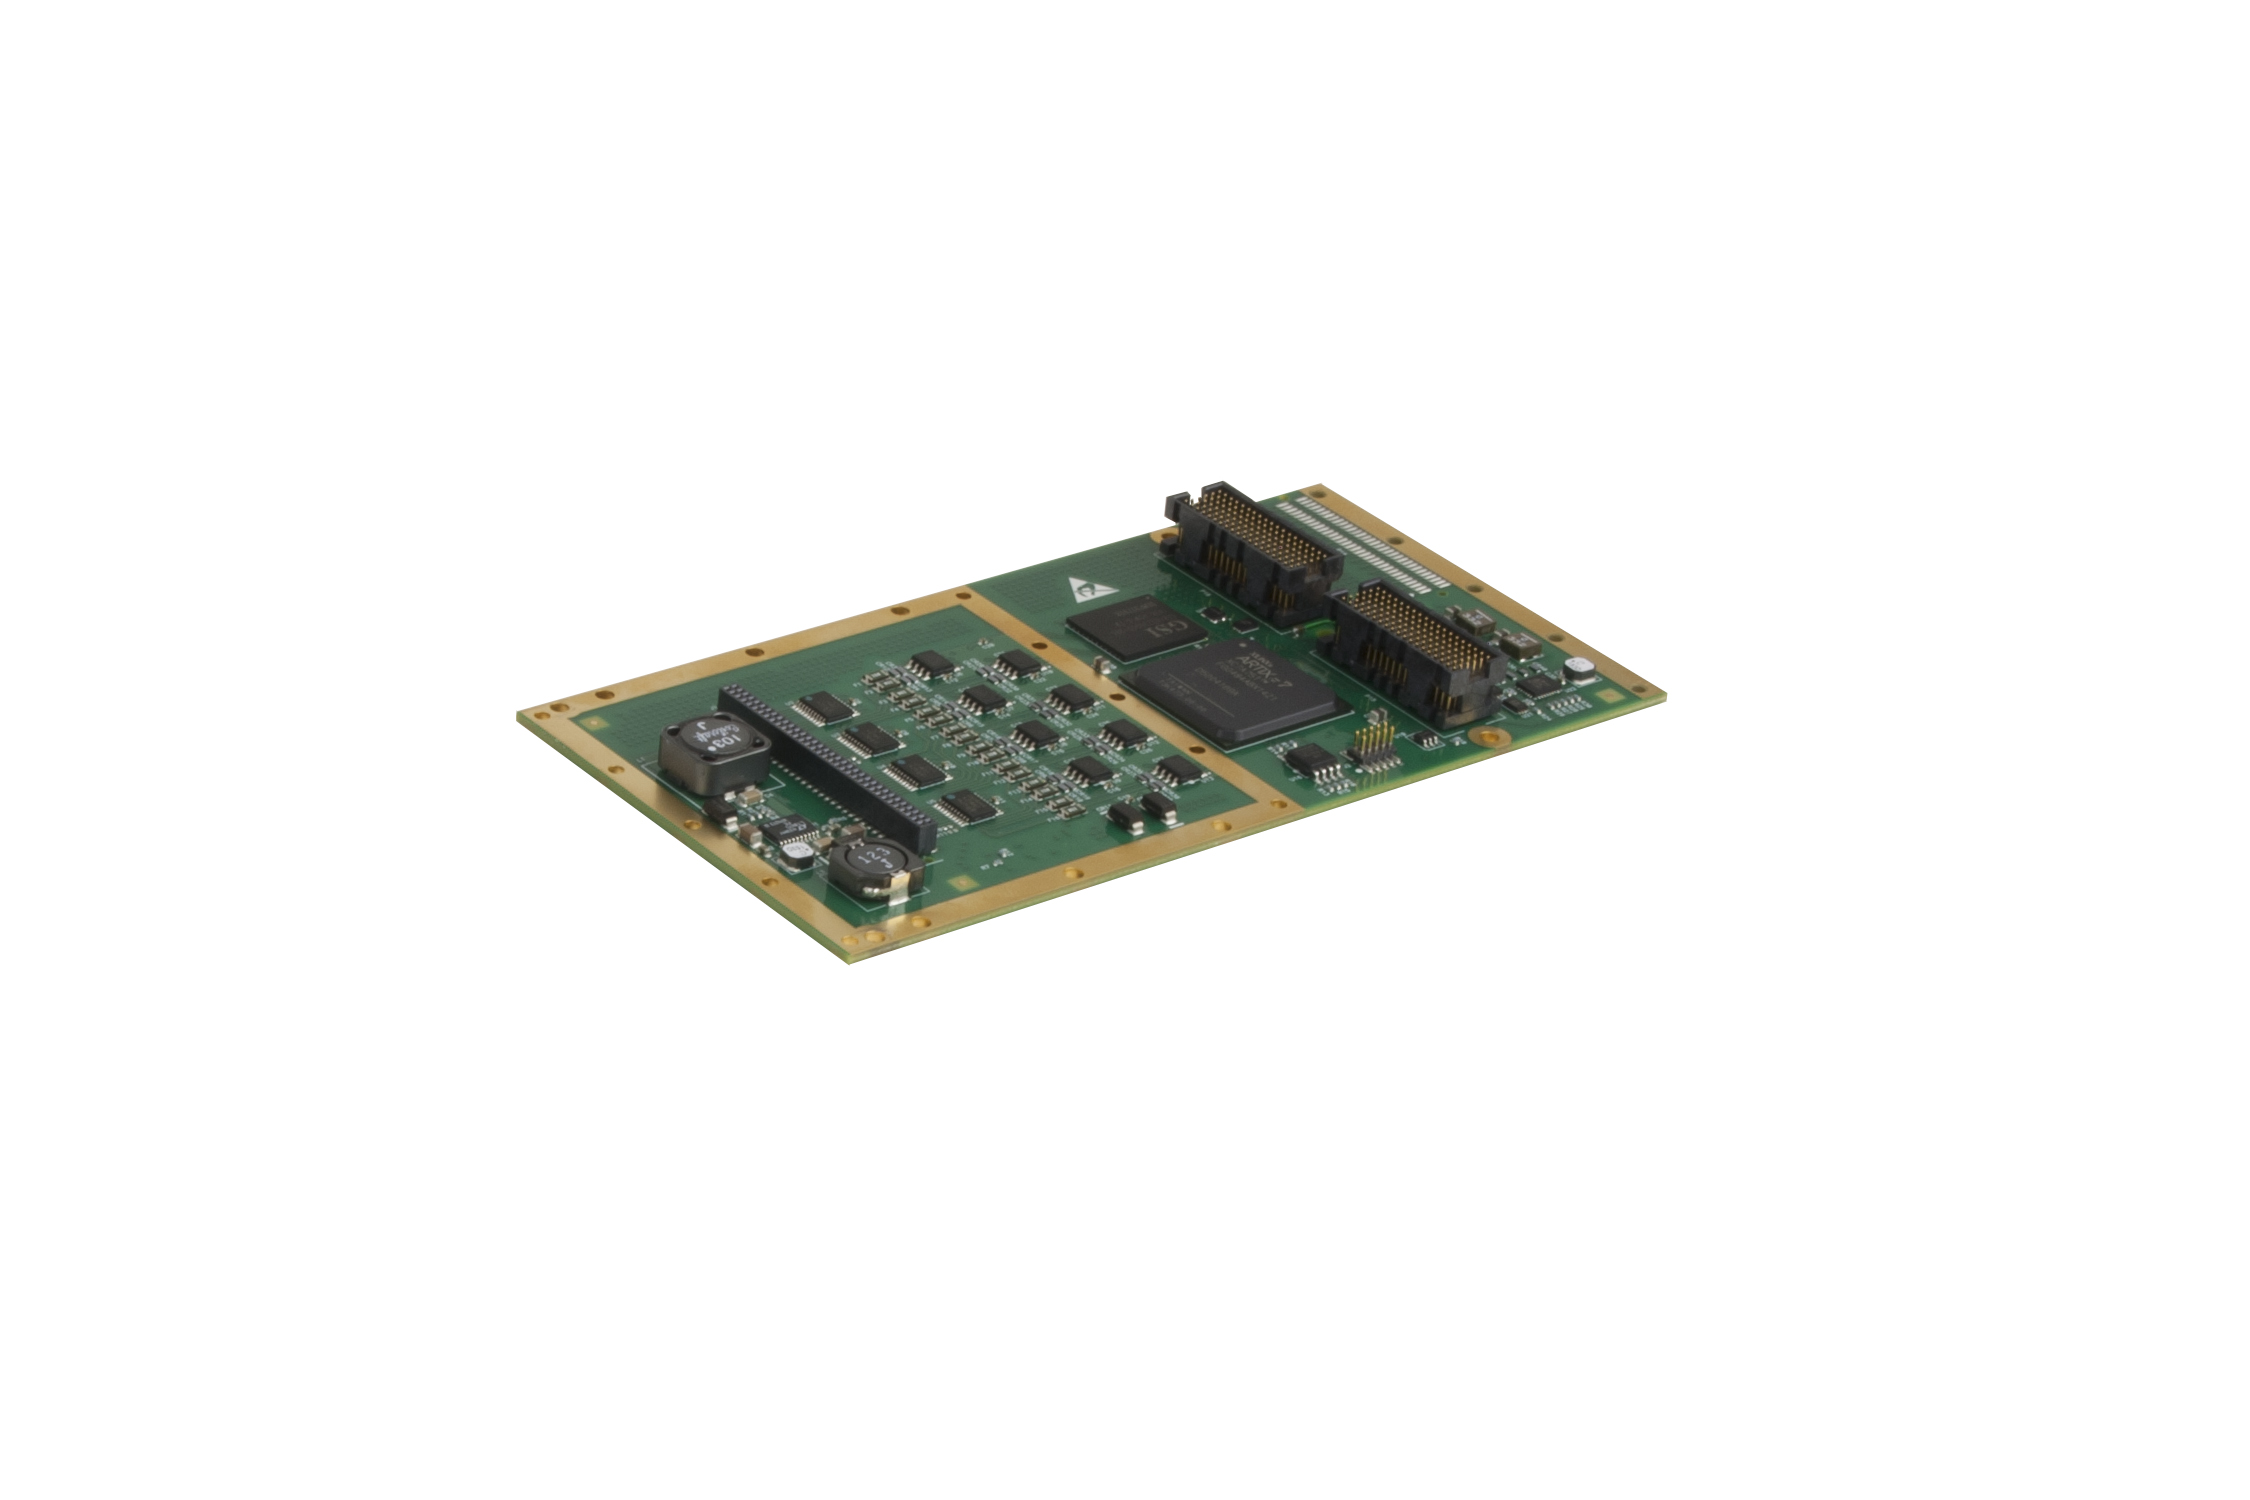 The RAR-XMC ARINC 429 High Density XMC Interface from GE Intelligent Platforms